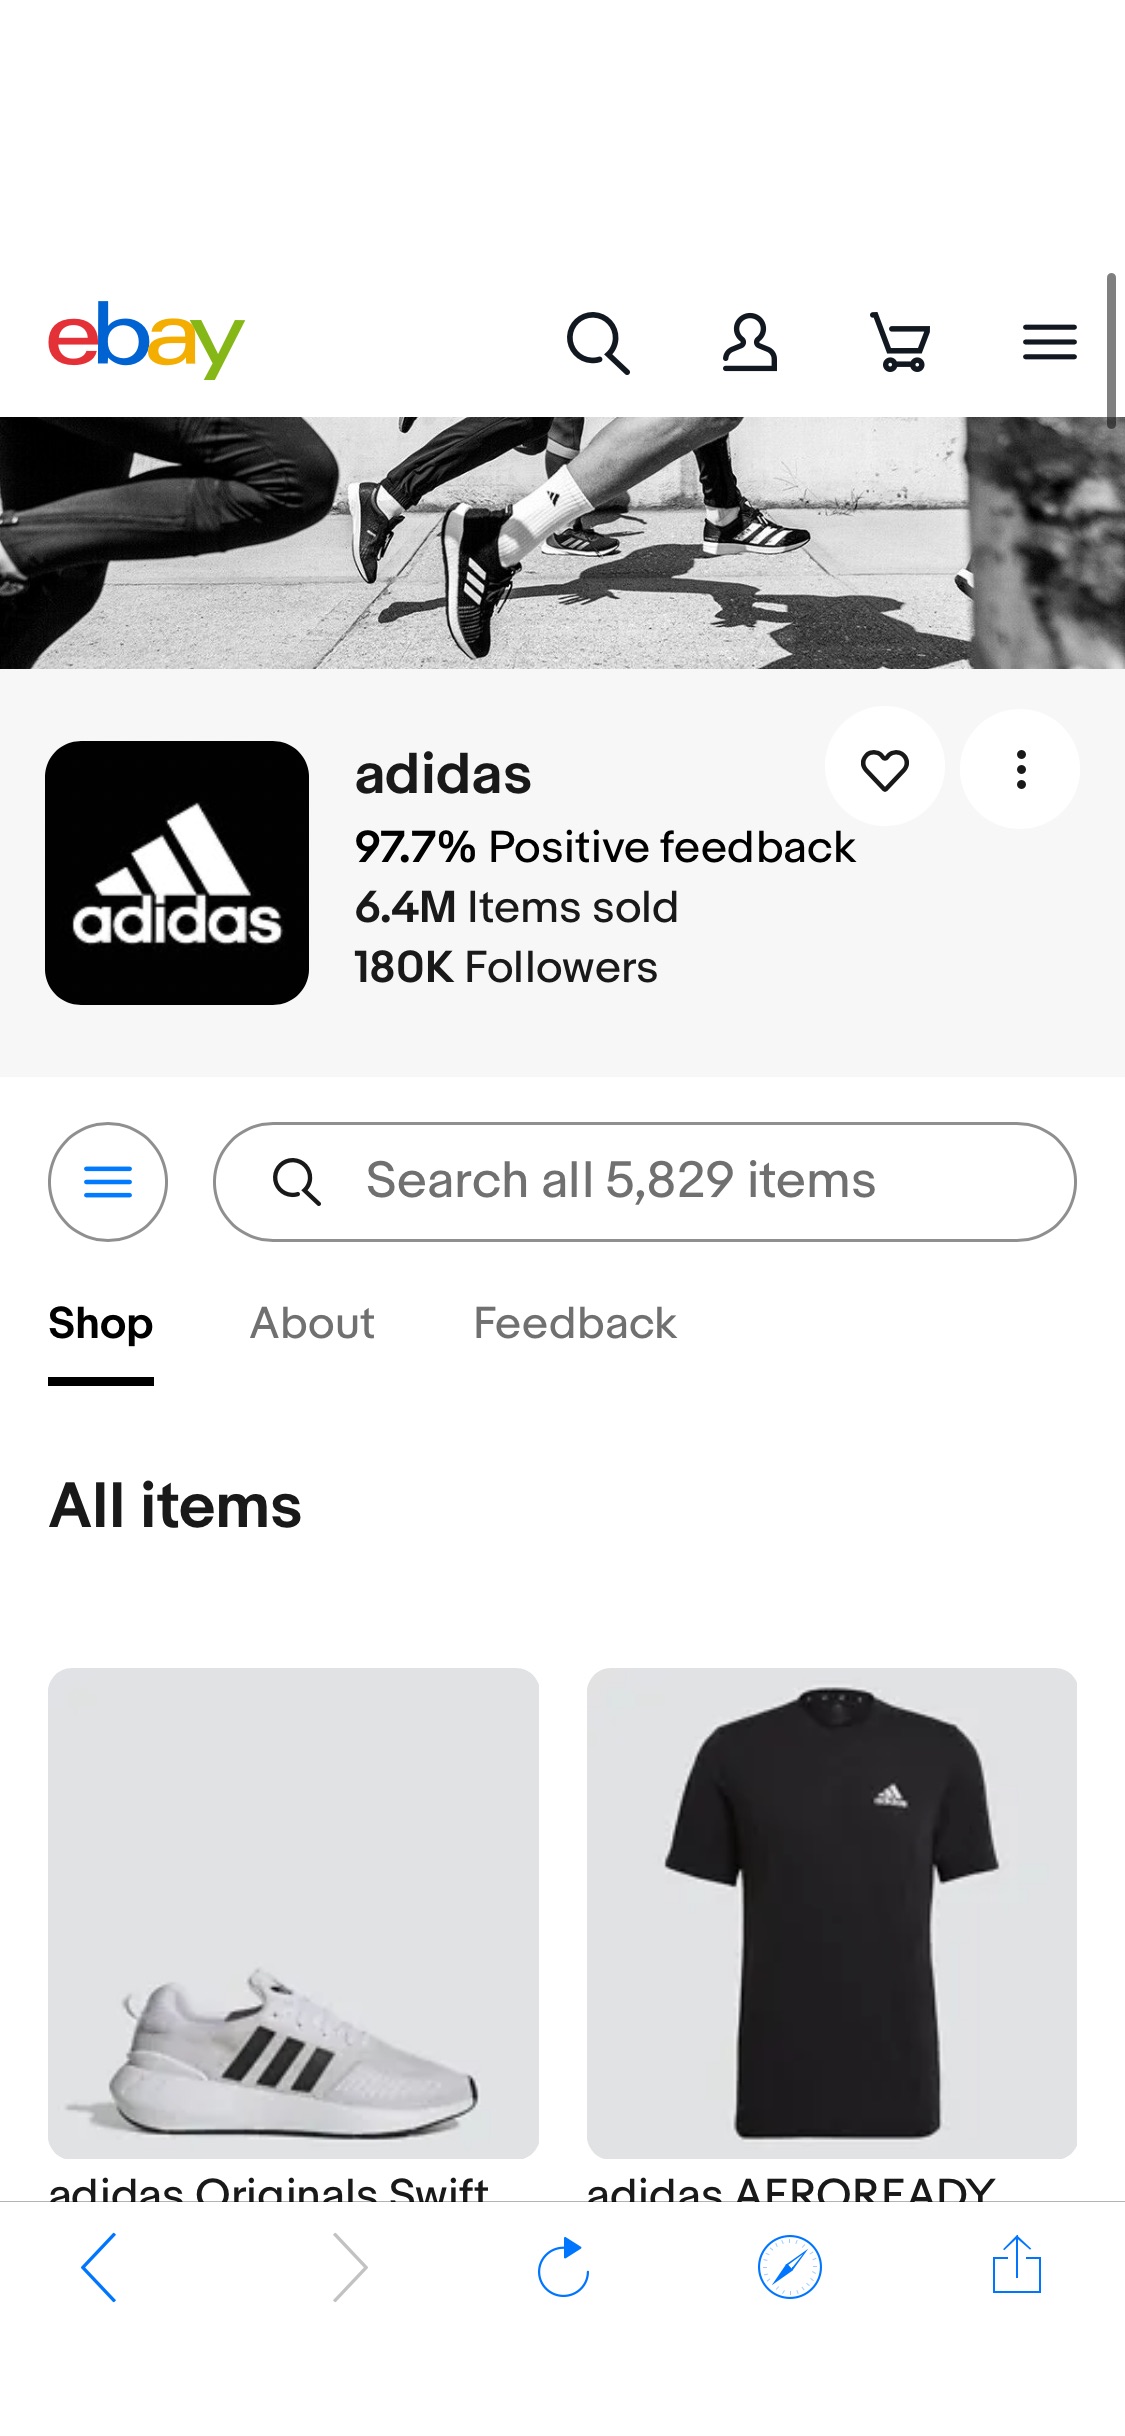 ebay Adidas 全场35%off叠加额外20%off